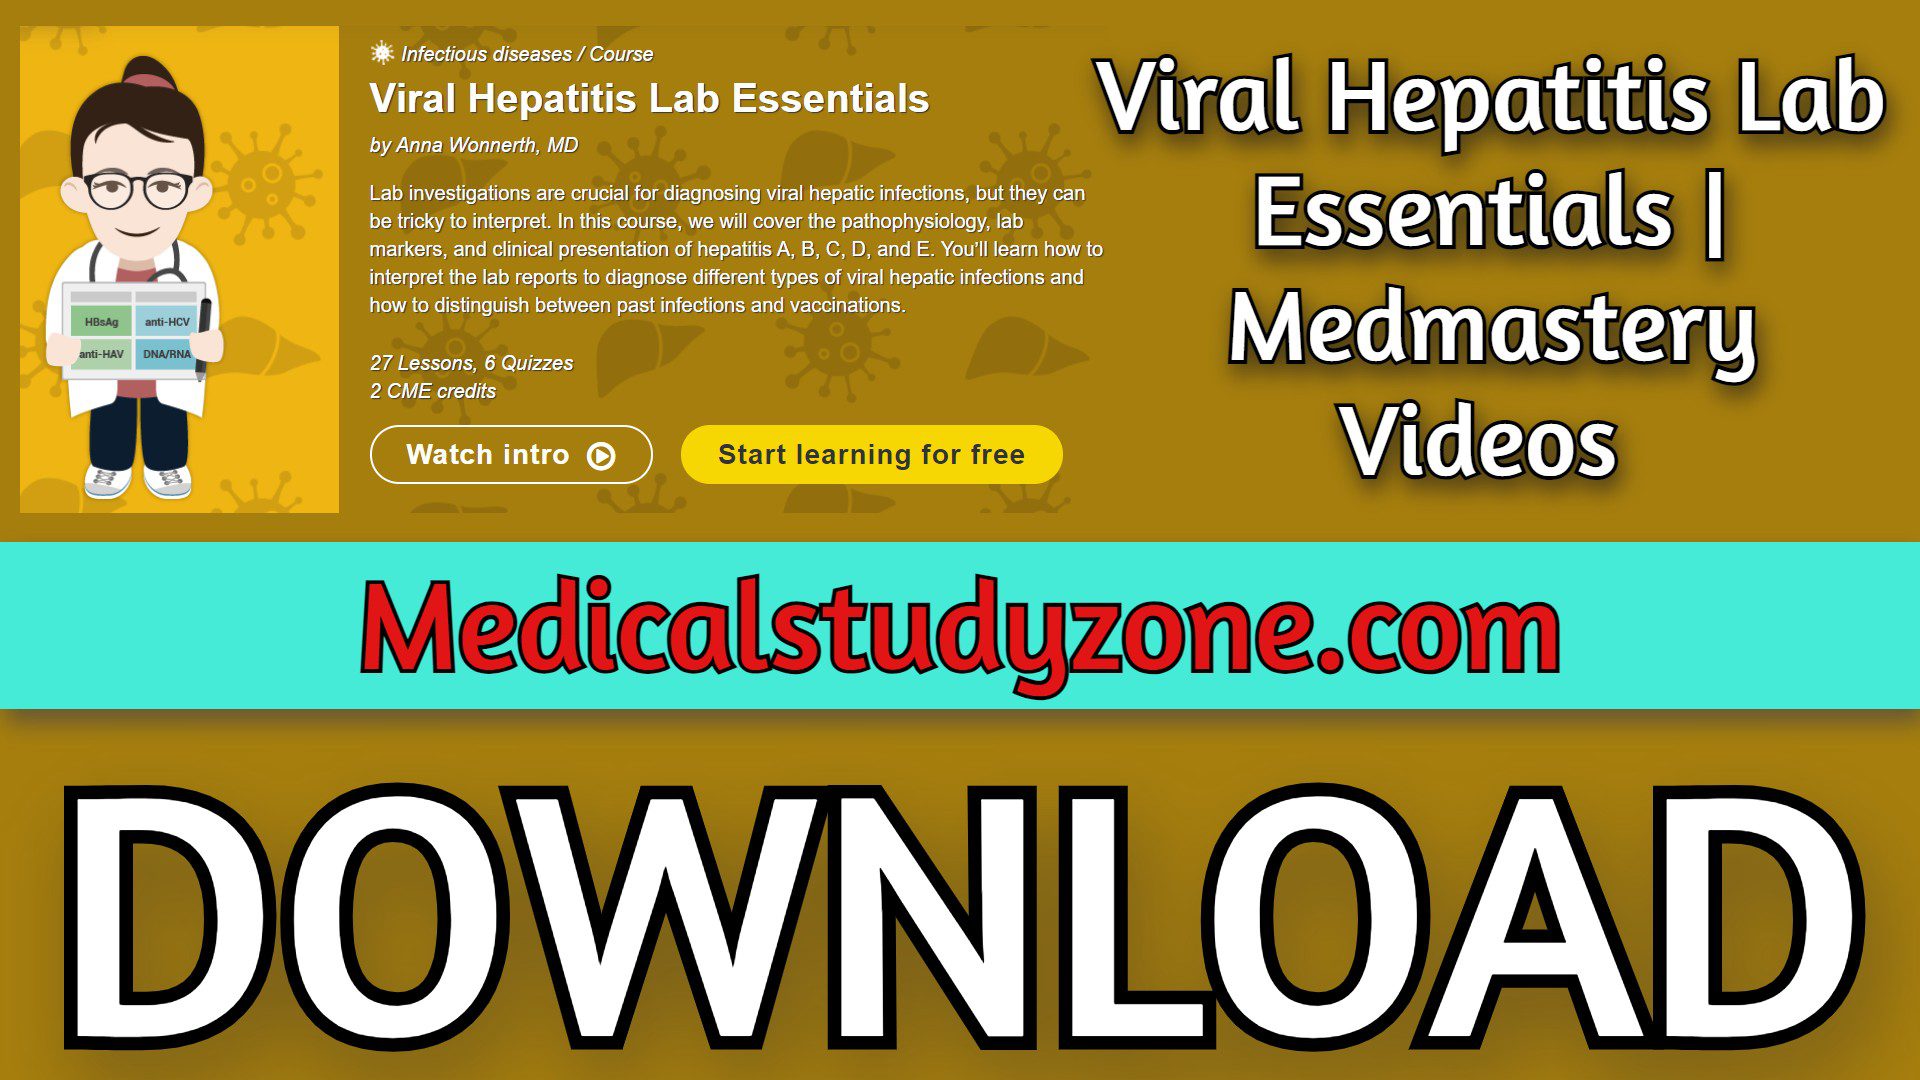 Viral Hepatitis Lab Essentials | Medmastery 2021 Videos Free Download